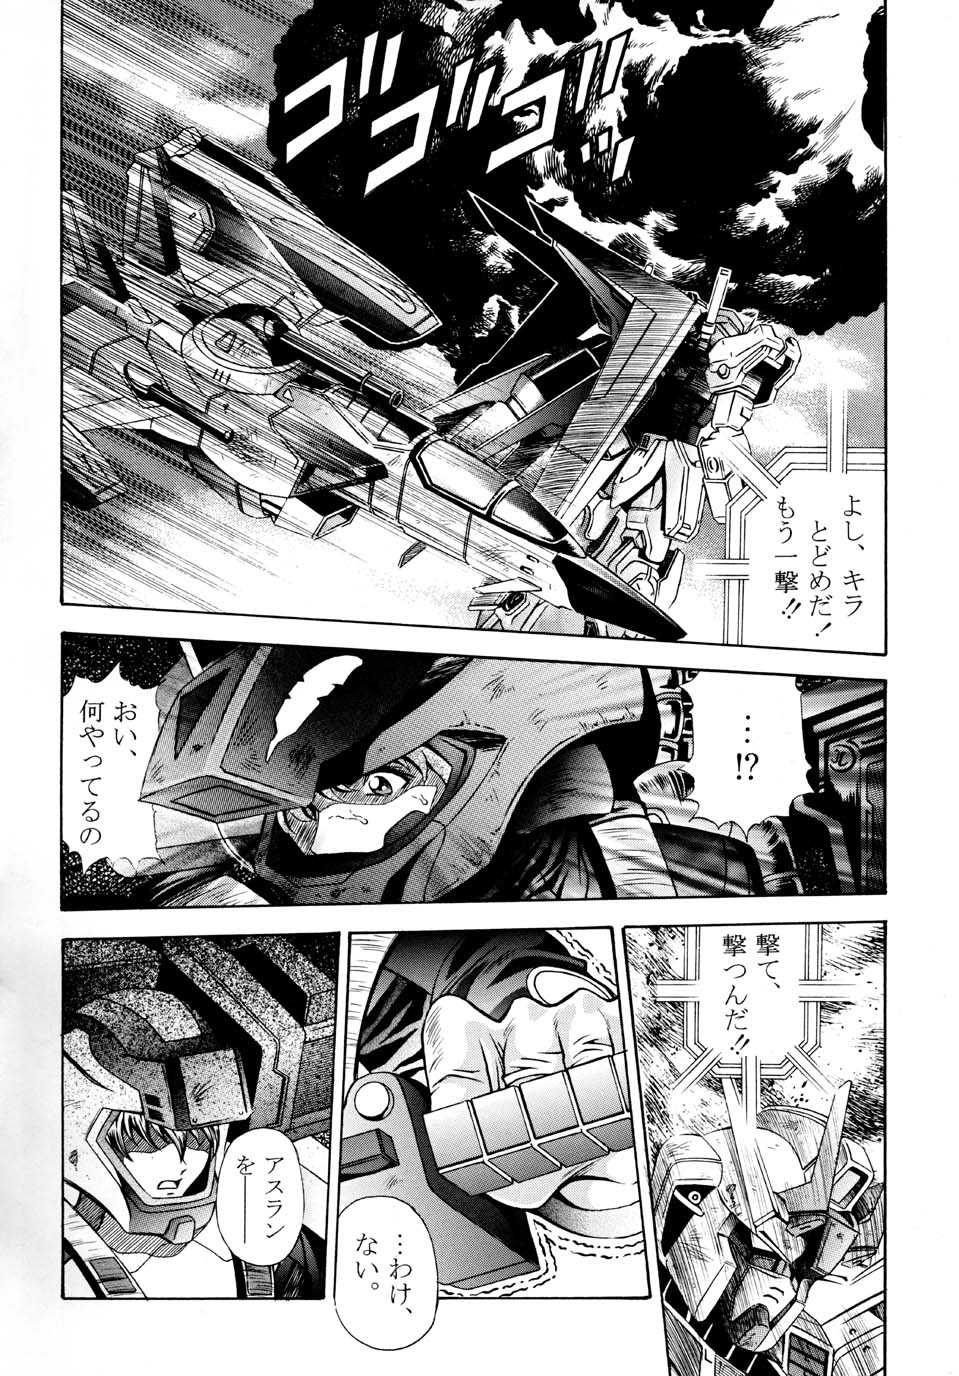 [Studio Hammer Rock] Gundam-H Vol. 03 [Gundam Seed] 